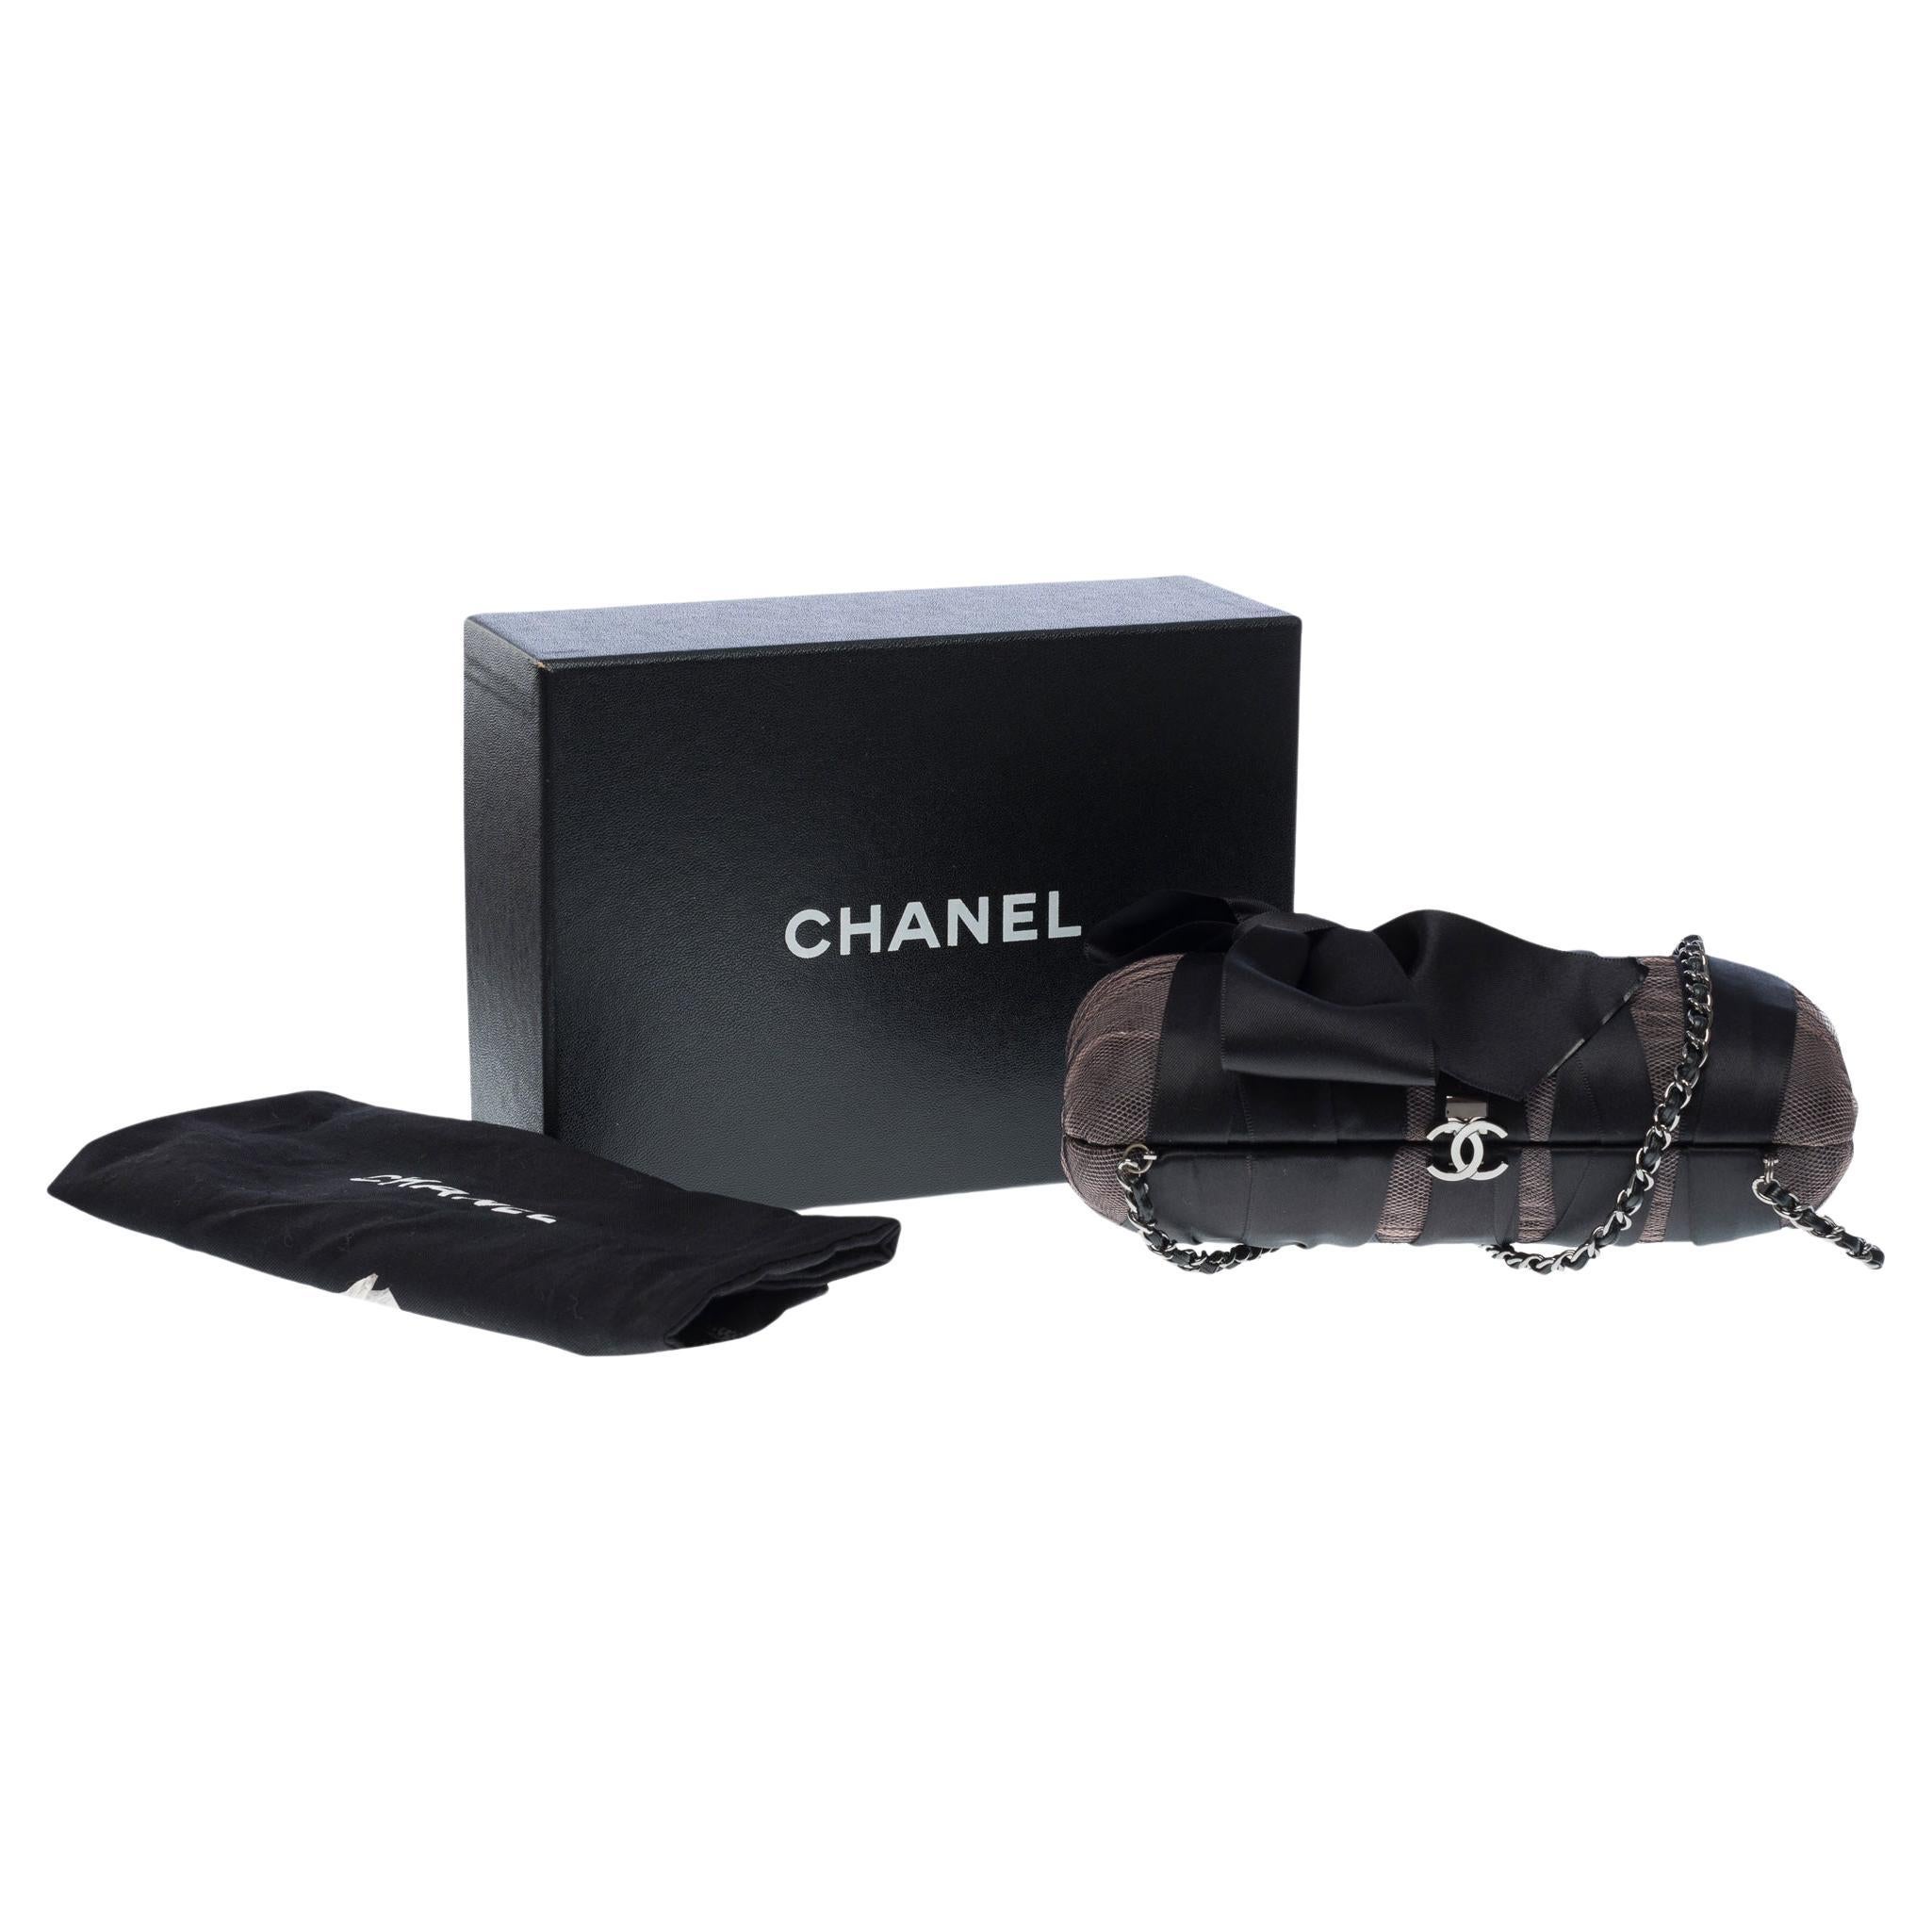 Rare limited edition Chanel Minaudière shoulder bag in black silk satin, BSHW For Sale